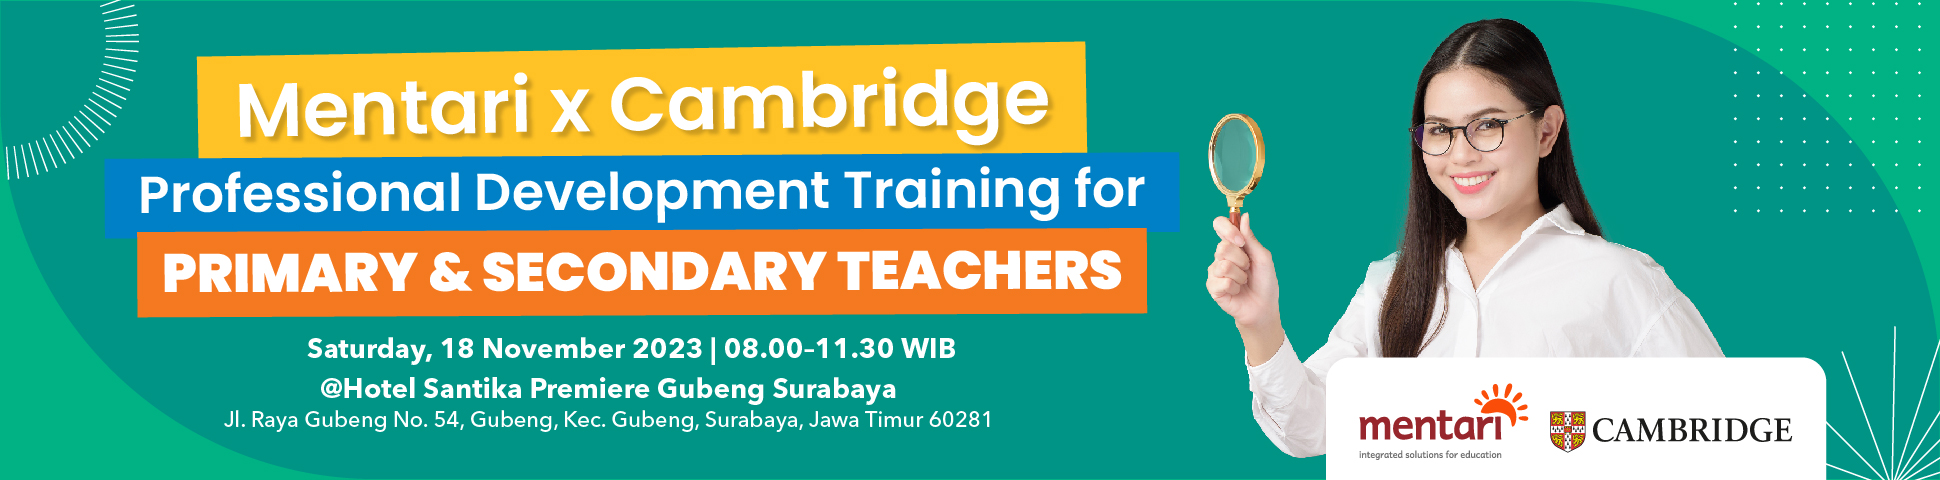 Mentari x Cambridge Professional Development Training for Primary & Secondary Teachers 2023 - Surabaya